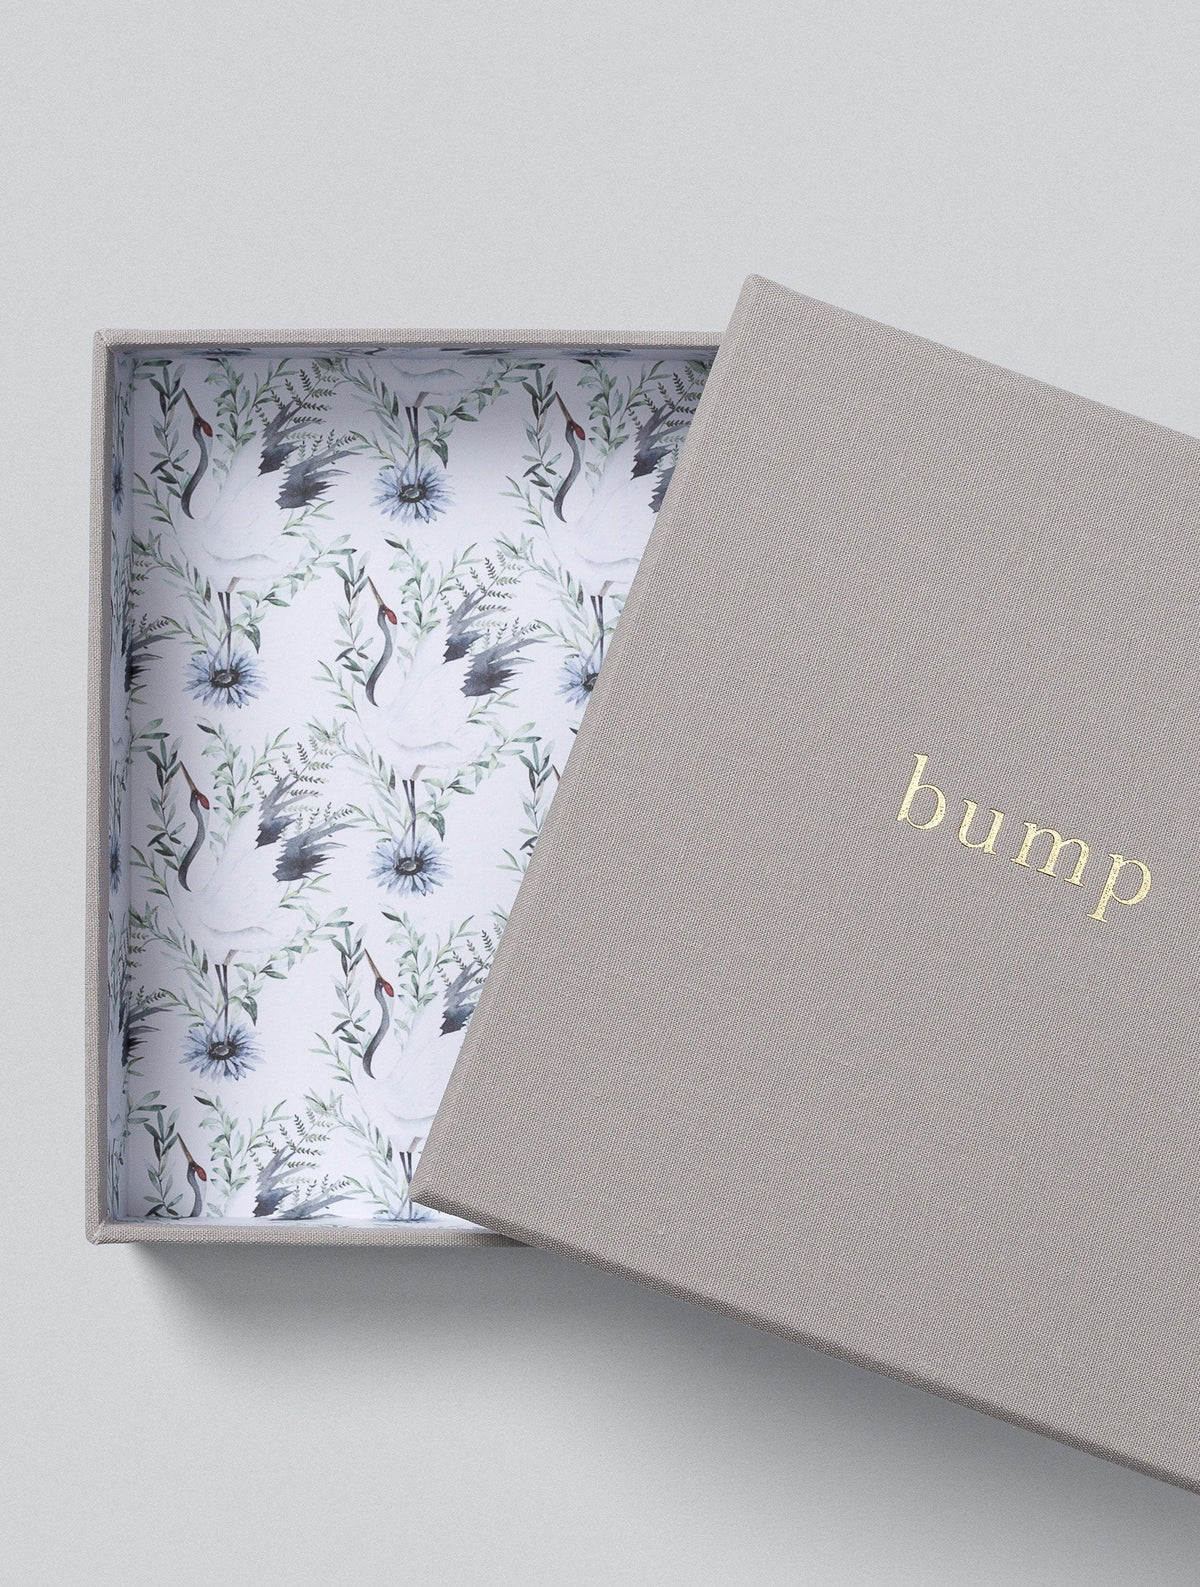 Bump. My Pregnancy Journal. Light Grey. Slightly Imperfect